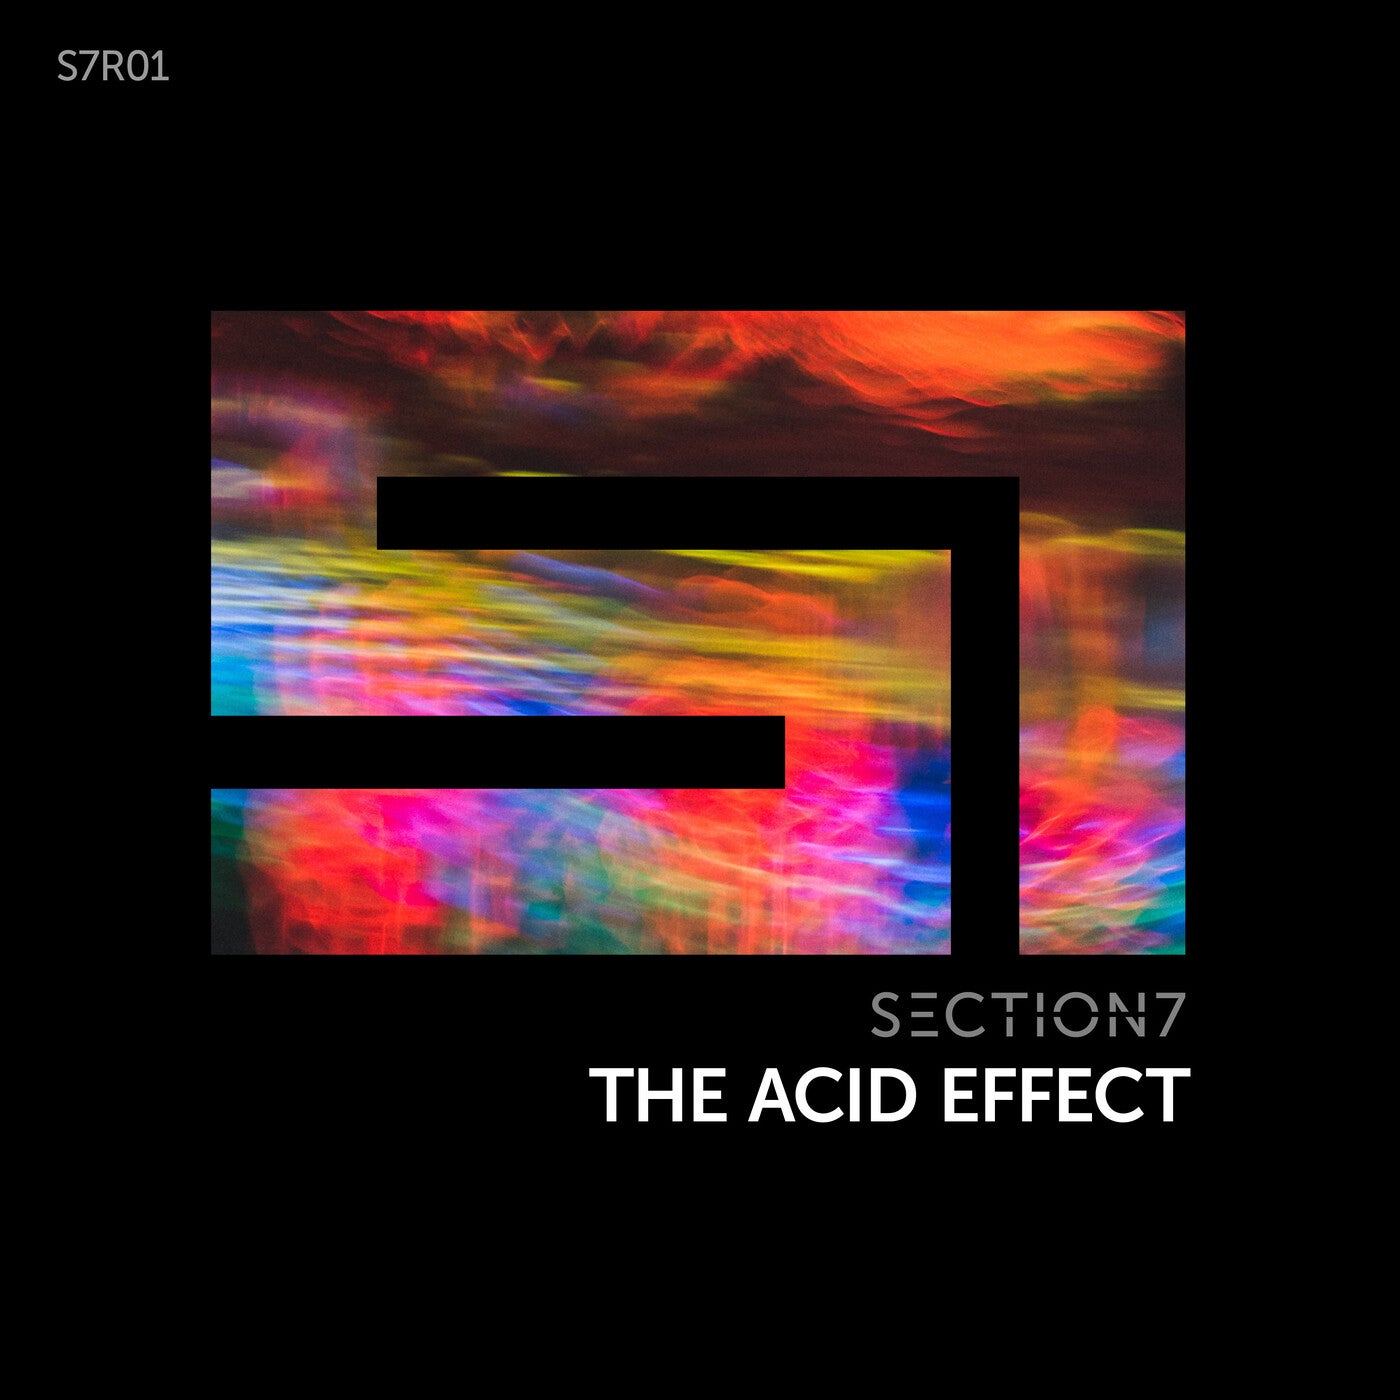 The Acid Effect